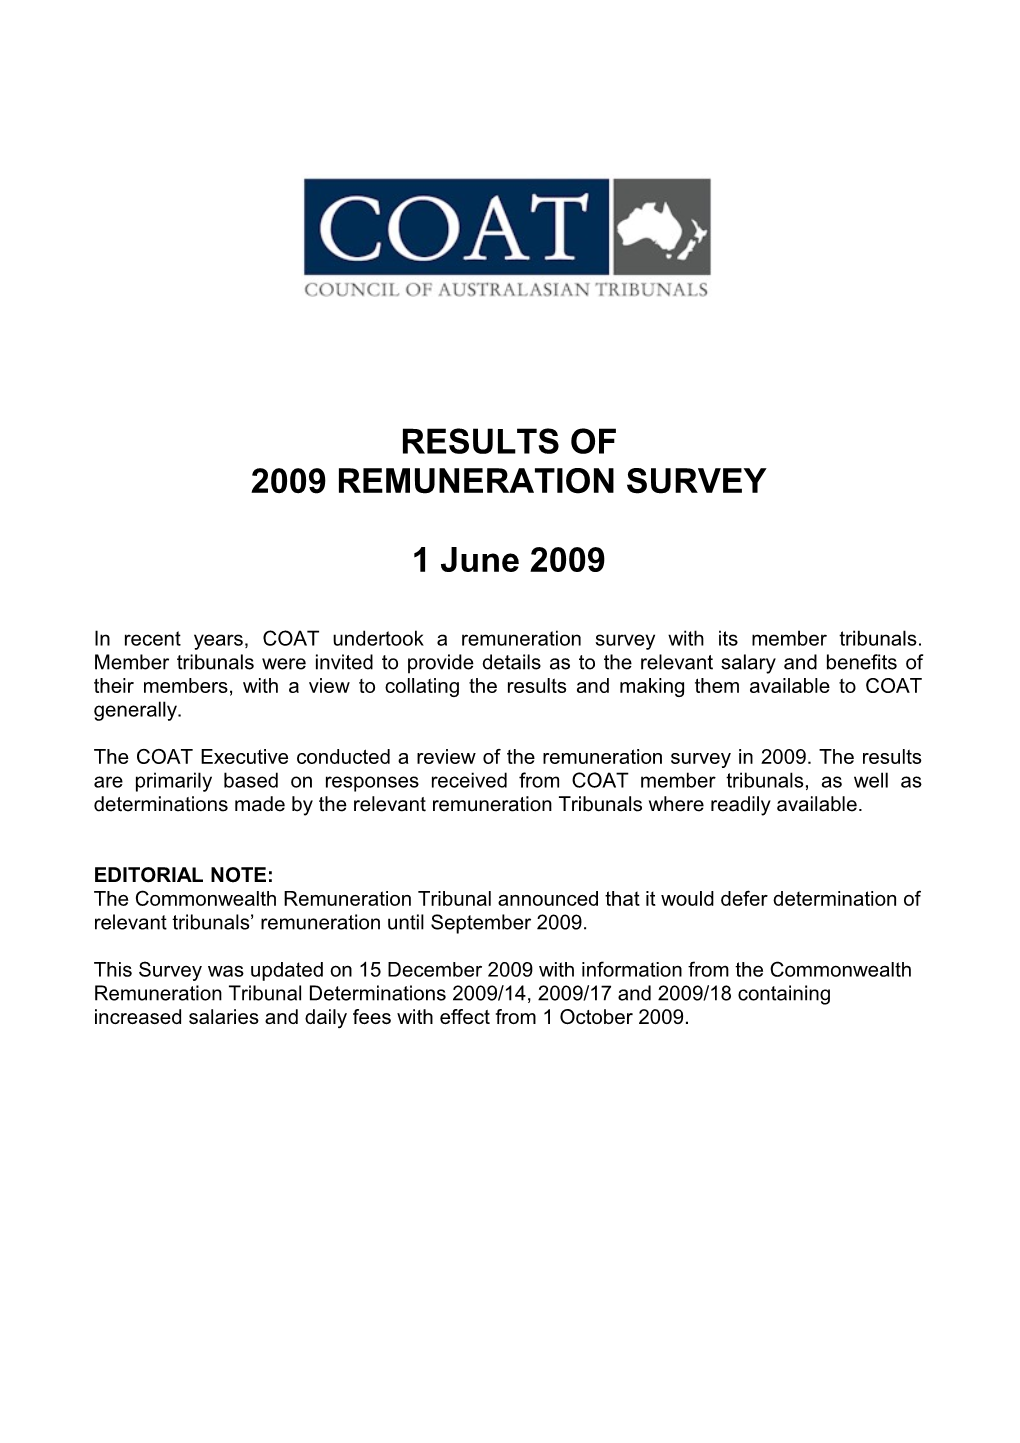 Results of Coat Remuneration Survey 2009